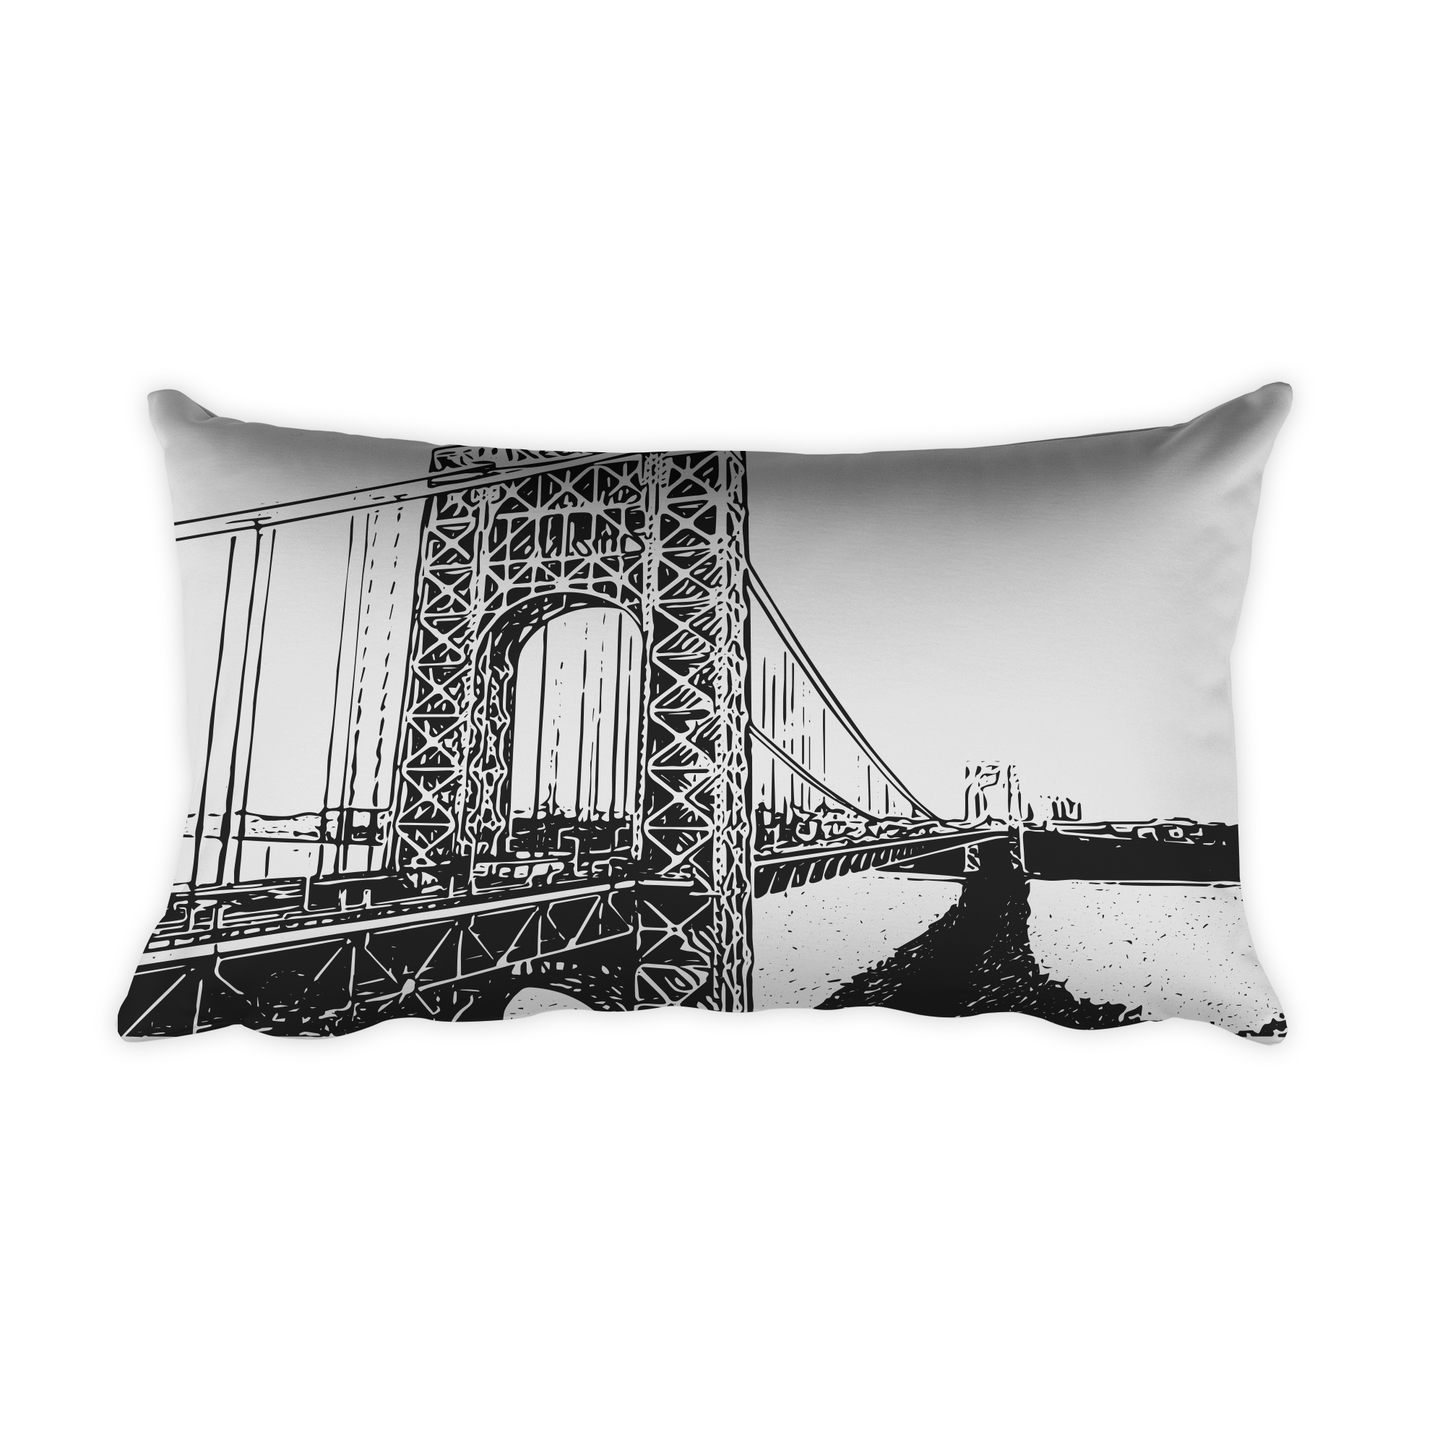 Pillow - "George Washington Bridge / Tokens"